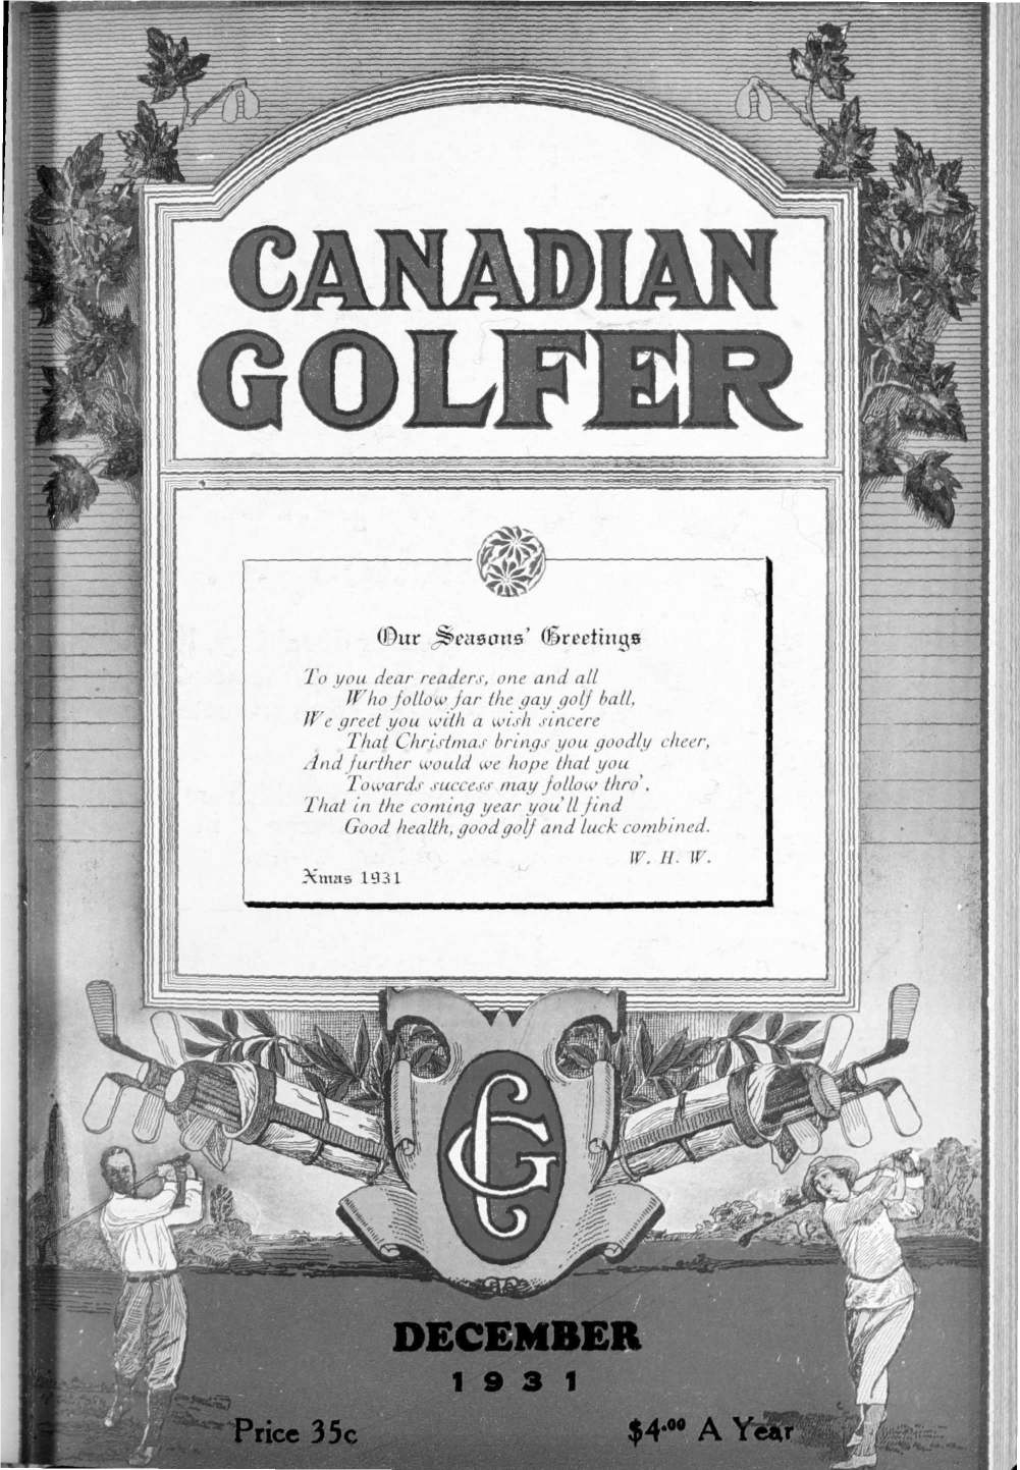 Canadian Golfer, December, 1931